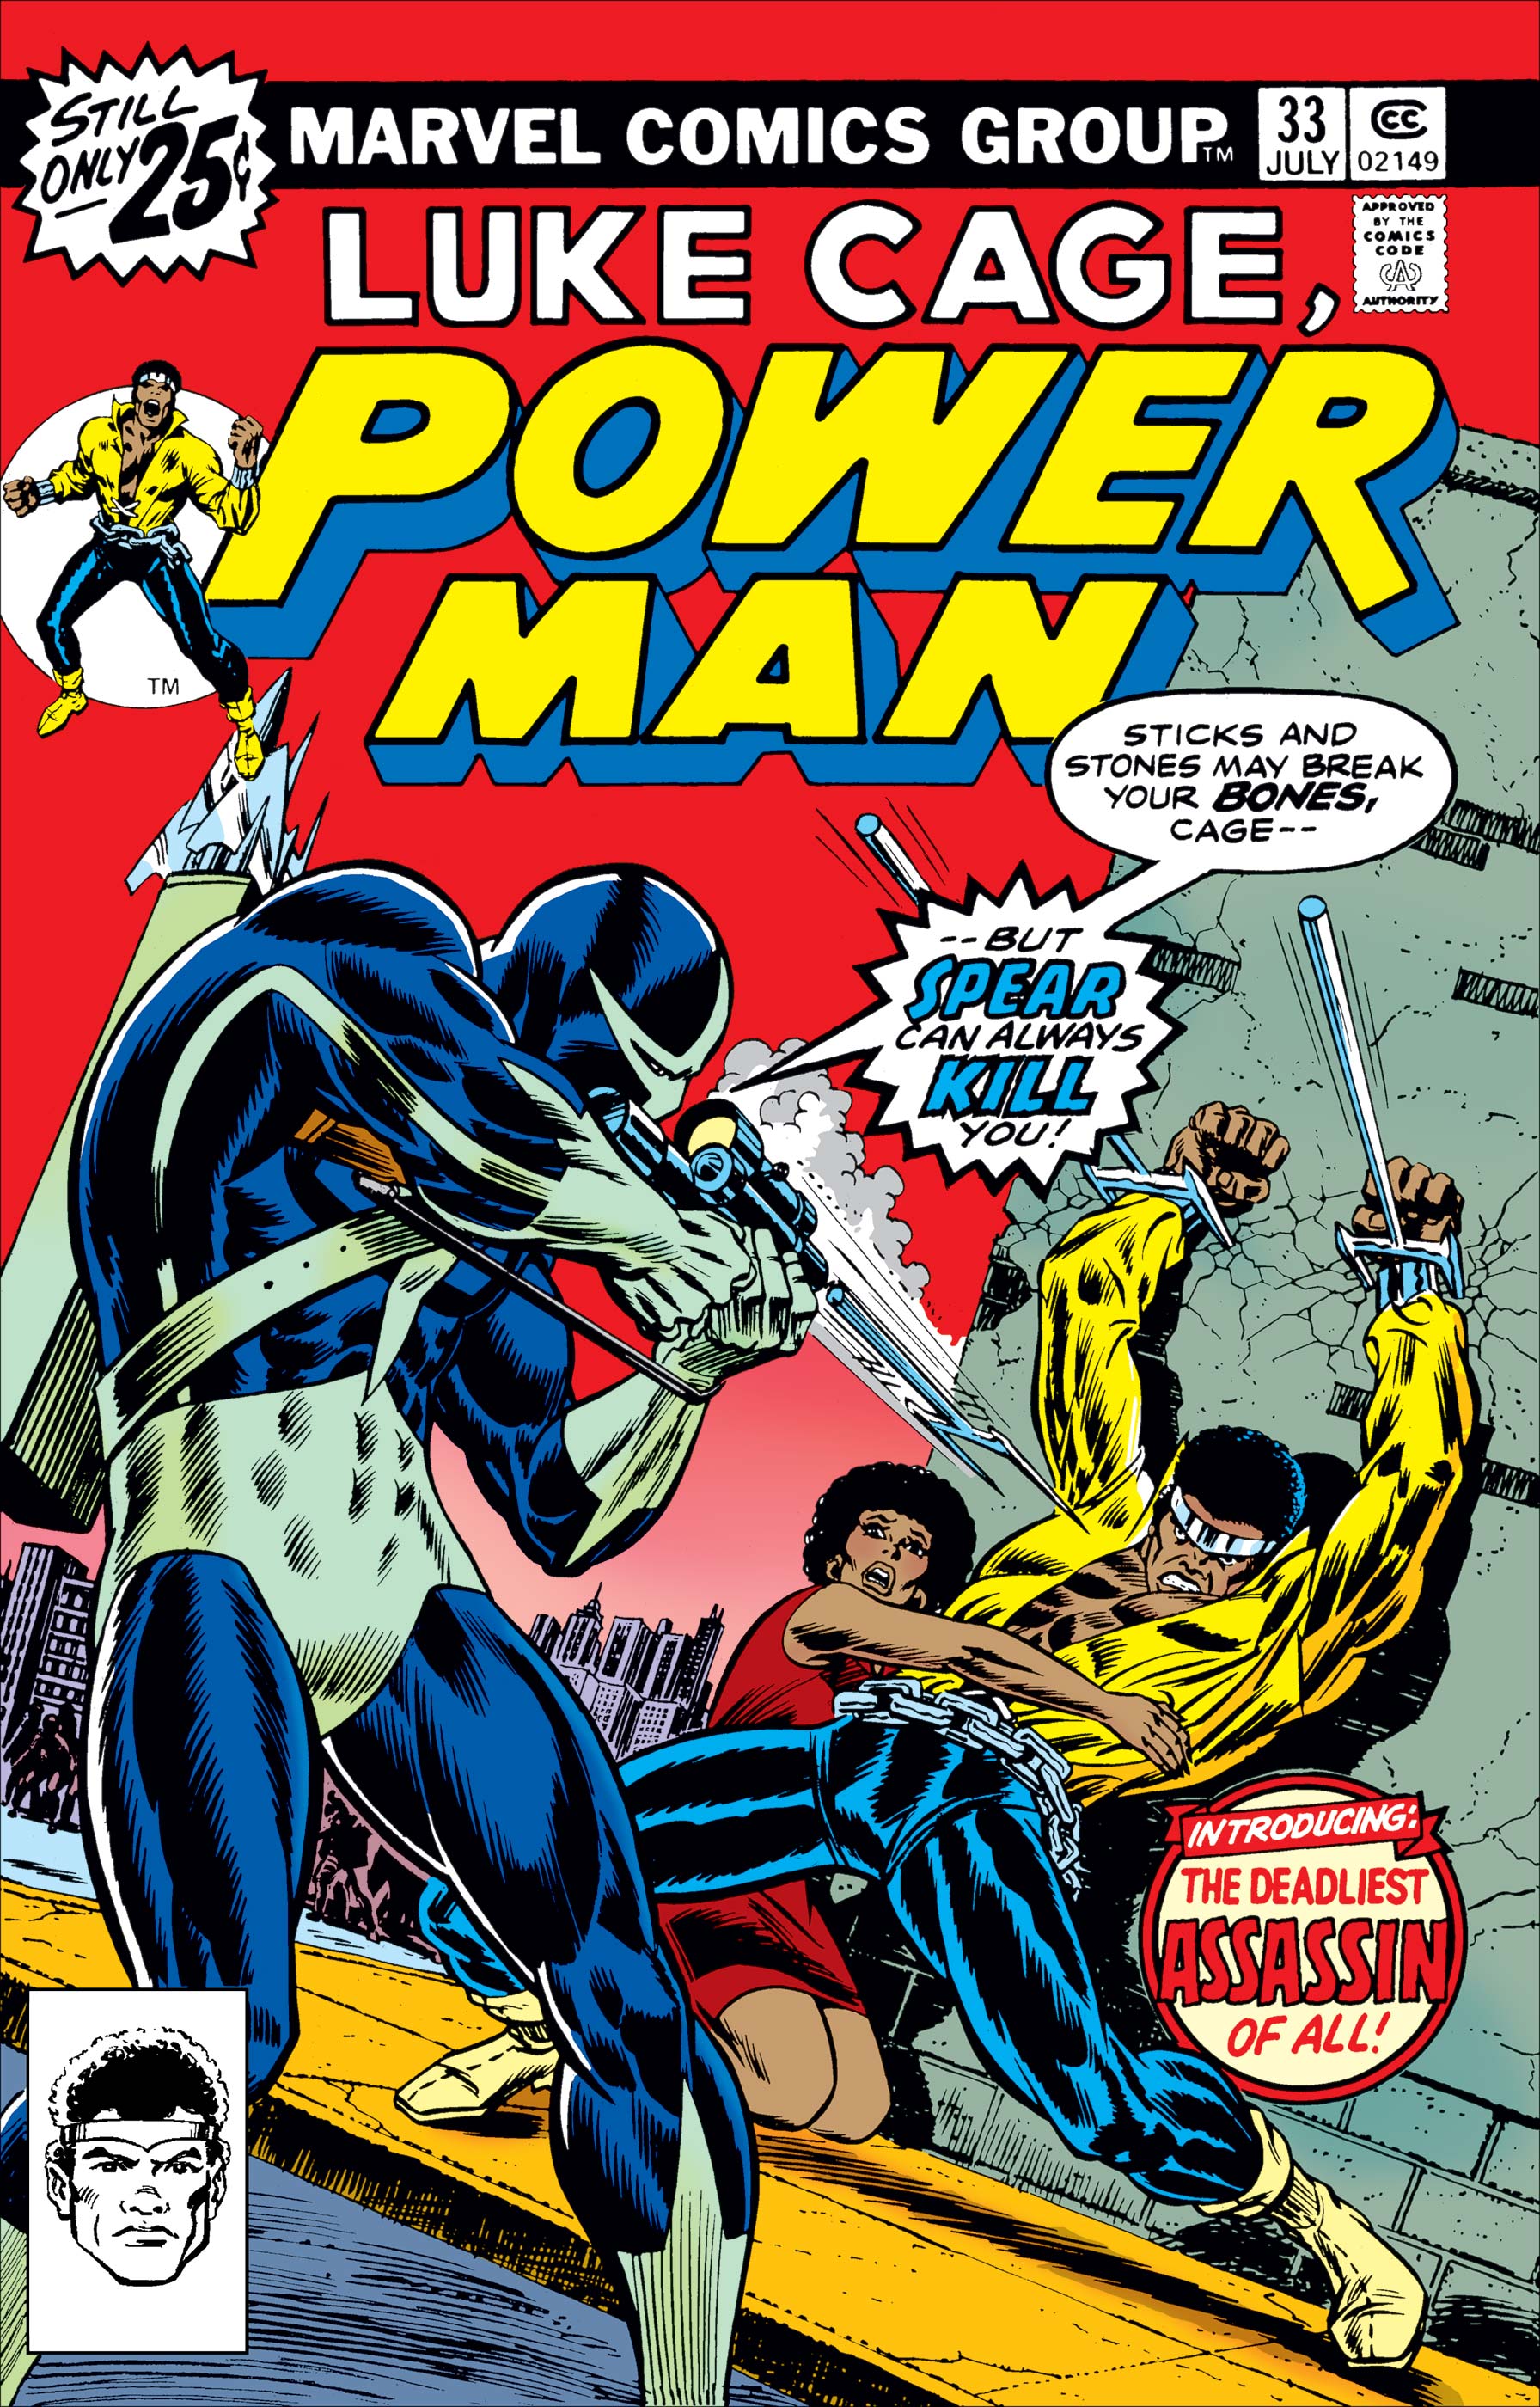 Power Man (1974) #33